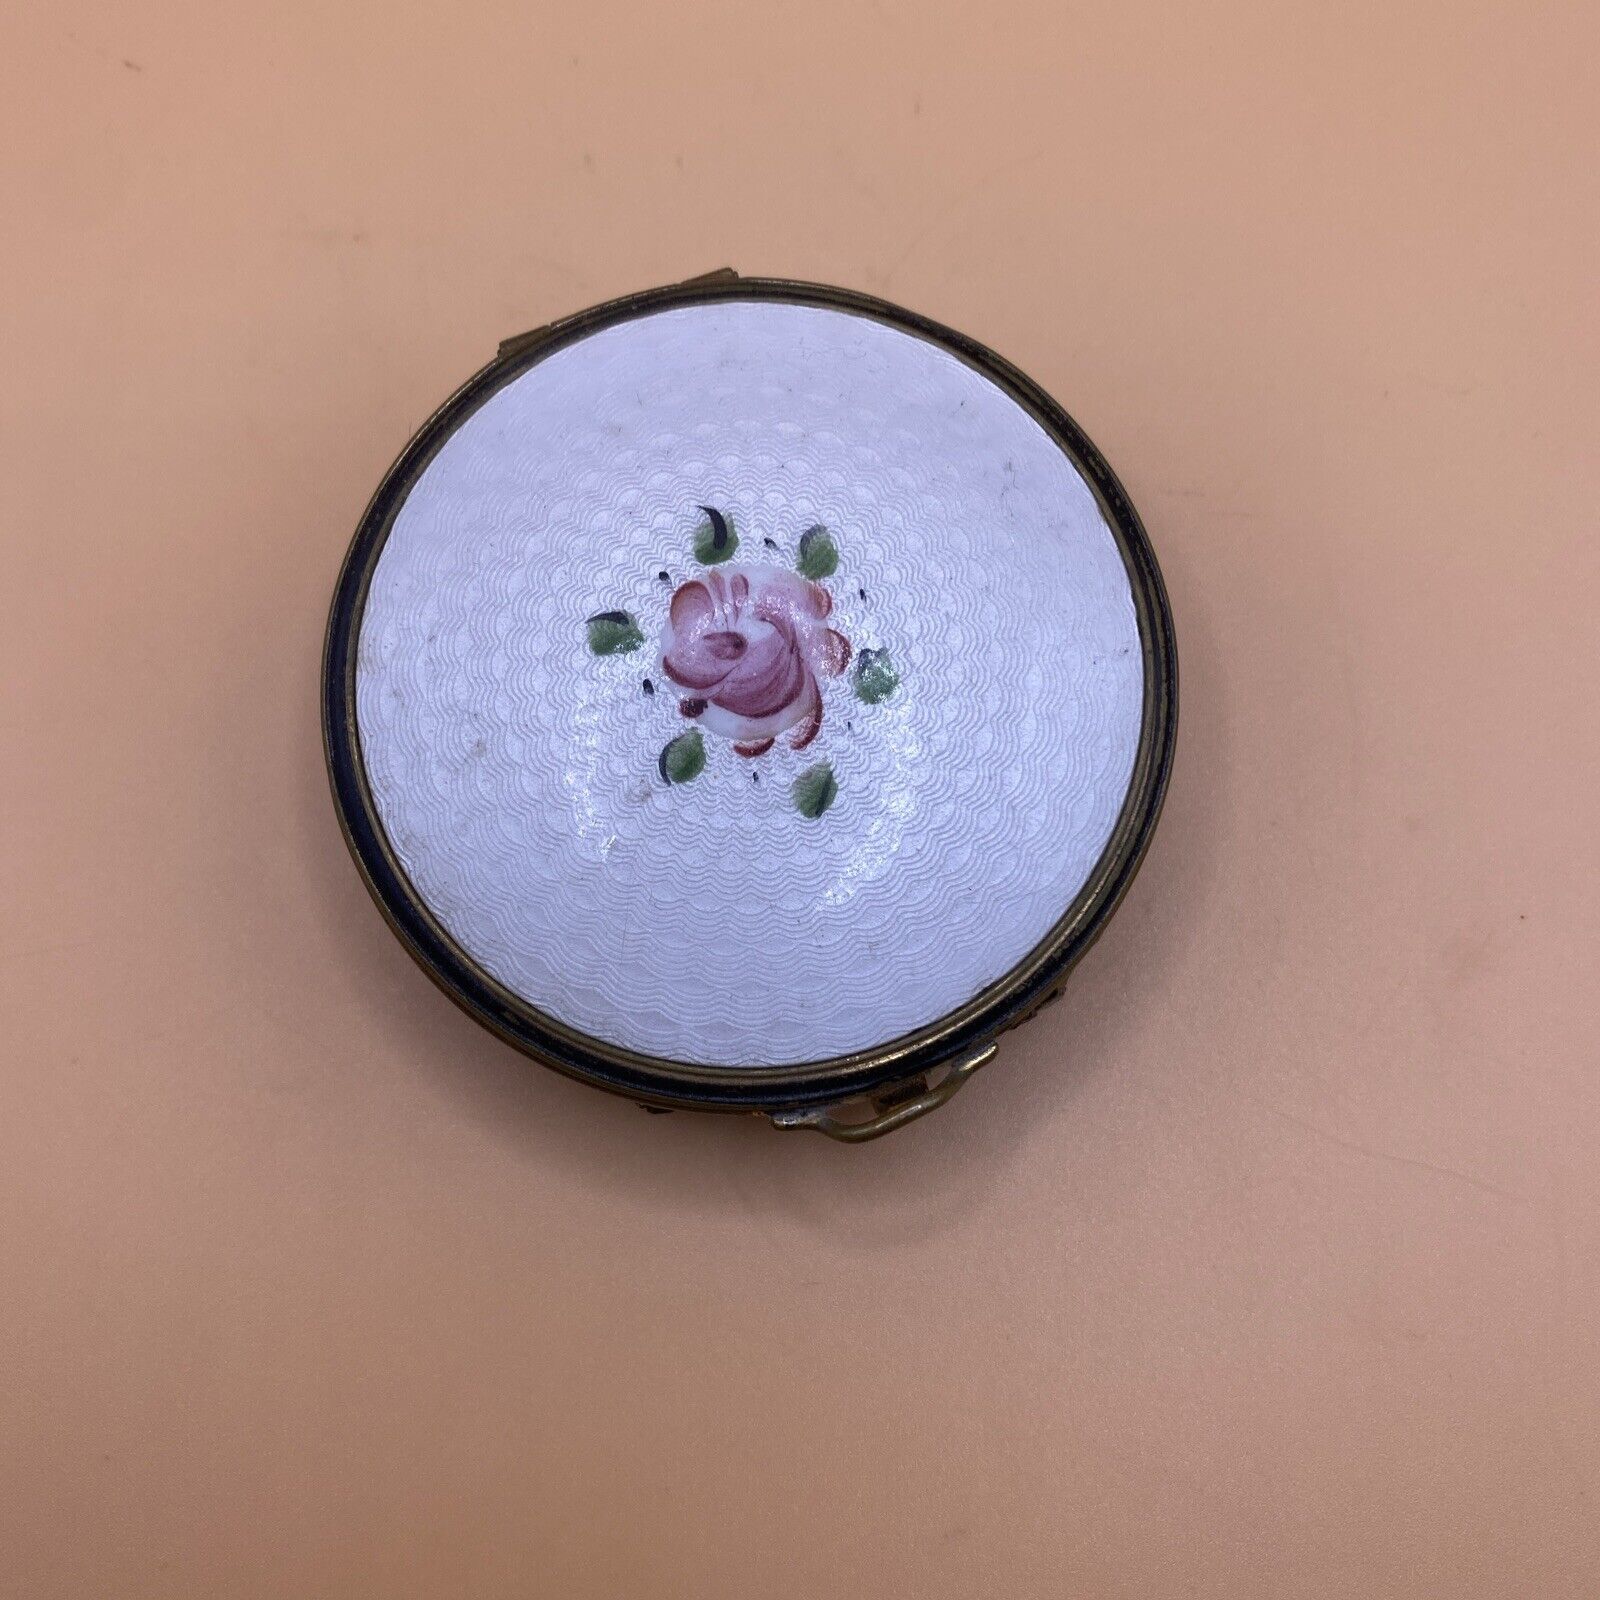 Vintage White Guilloche Enamel Flower Floral Makeup Mirror Compact